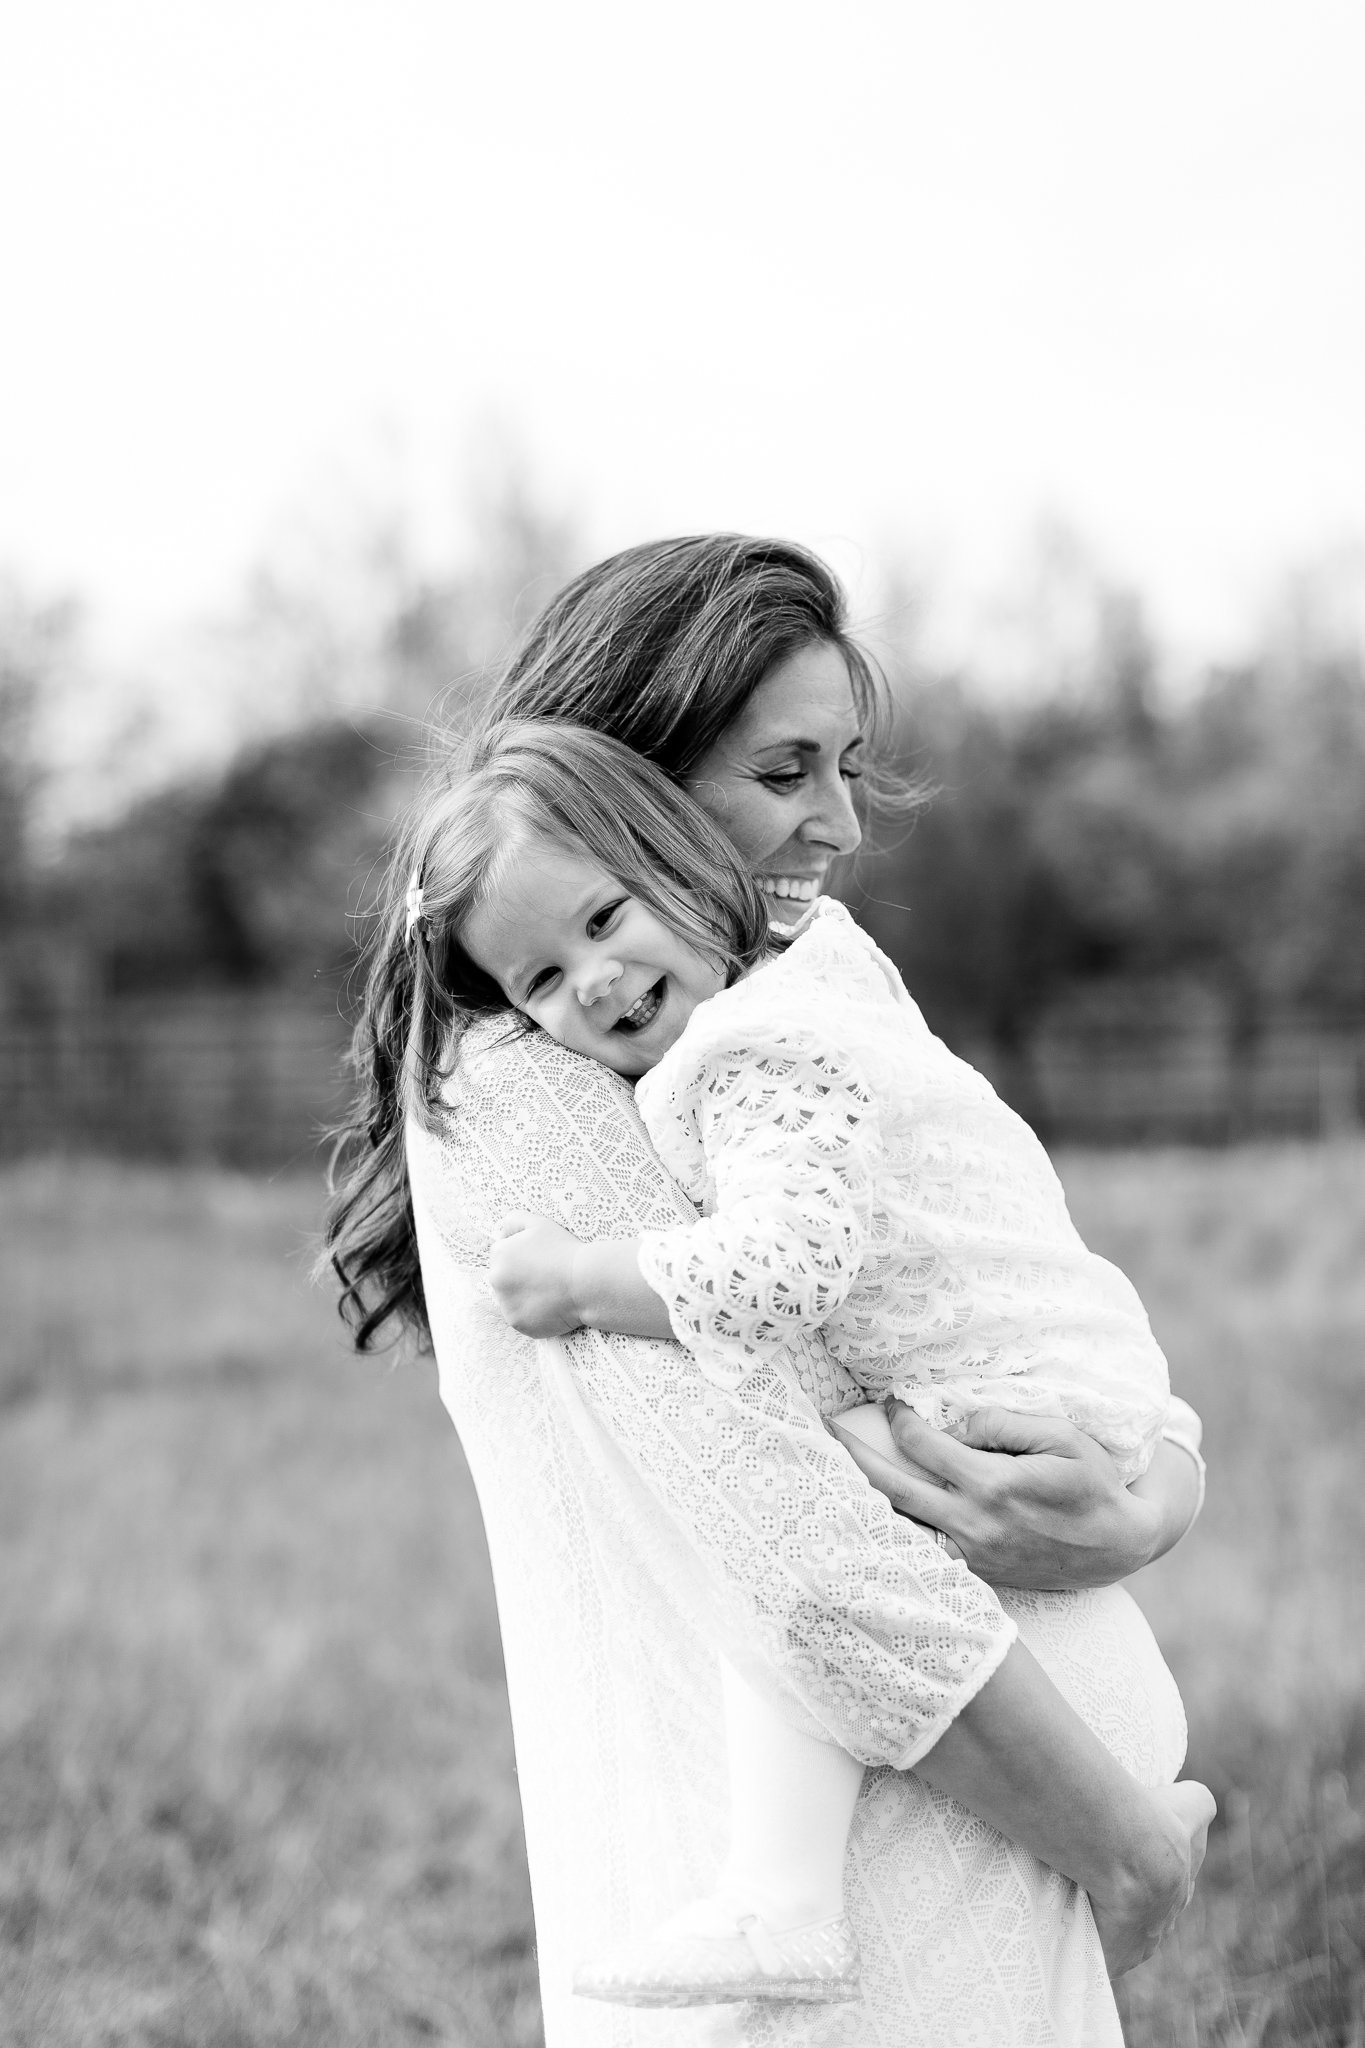 Nick + Jenn | Emily Moller Photography | Maternity Lifestyle | Finals (9 of 22)